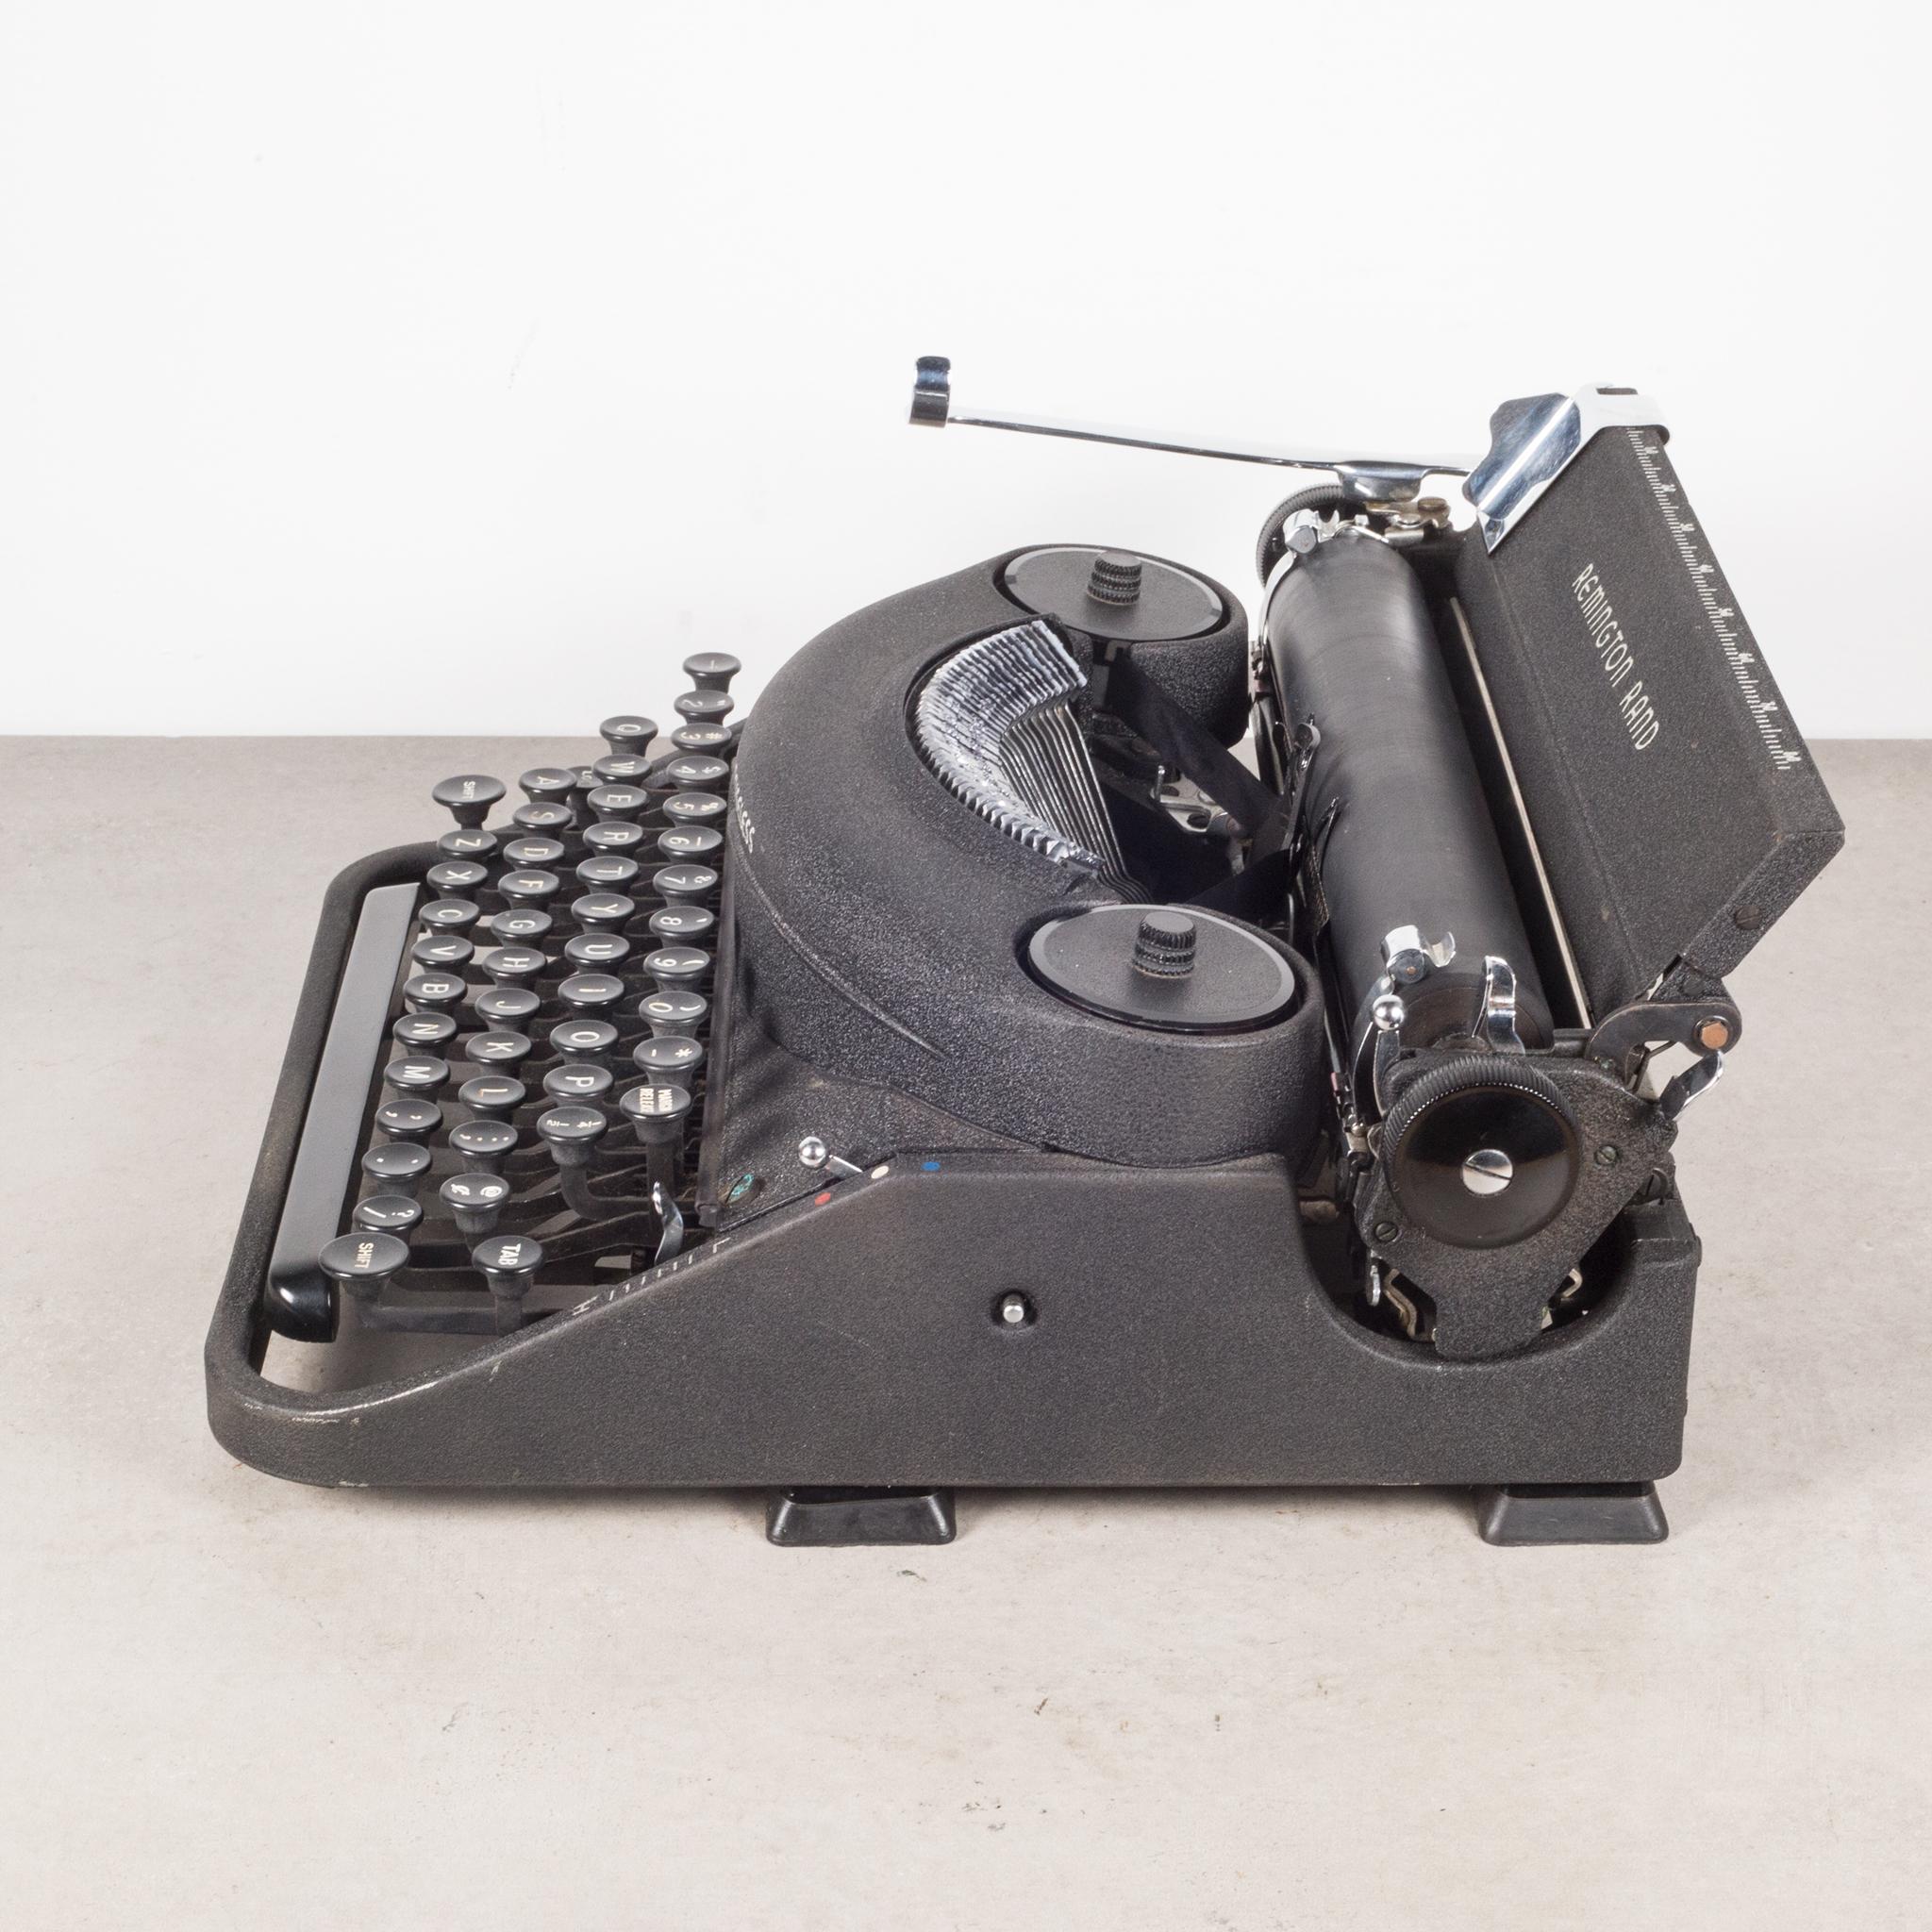 remington noiseless portable typewriter